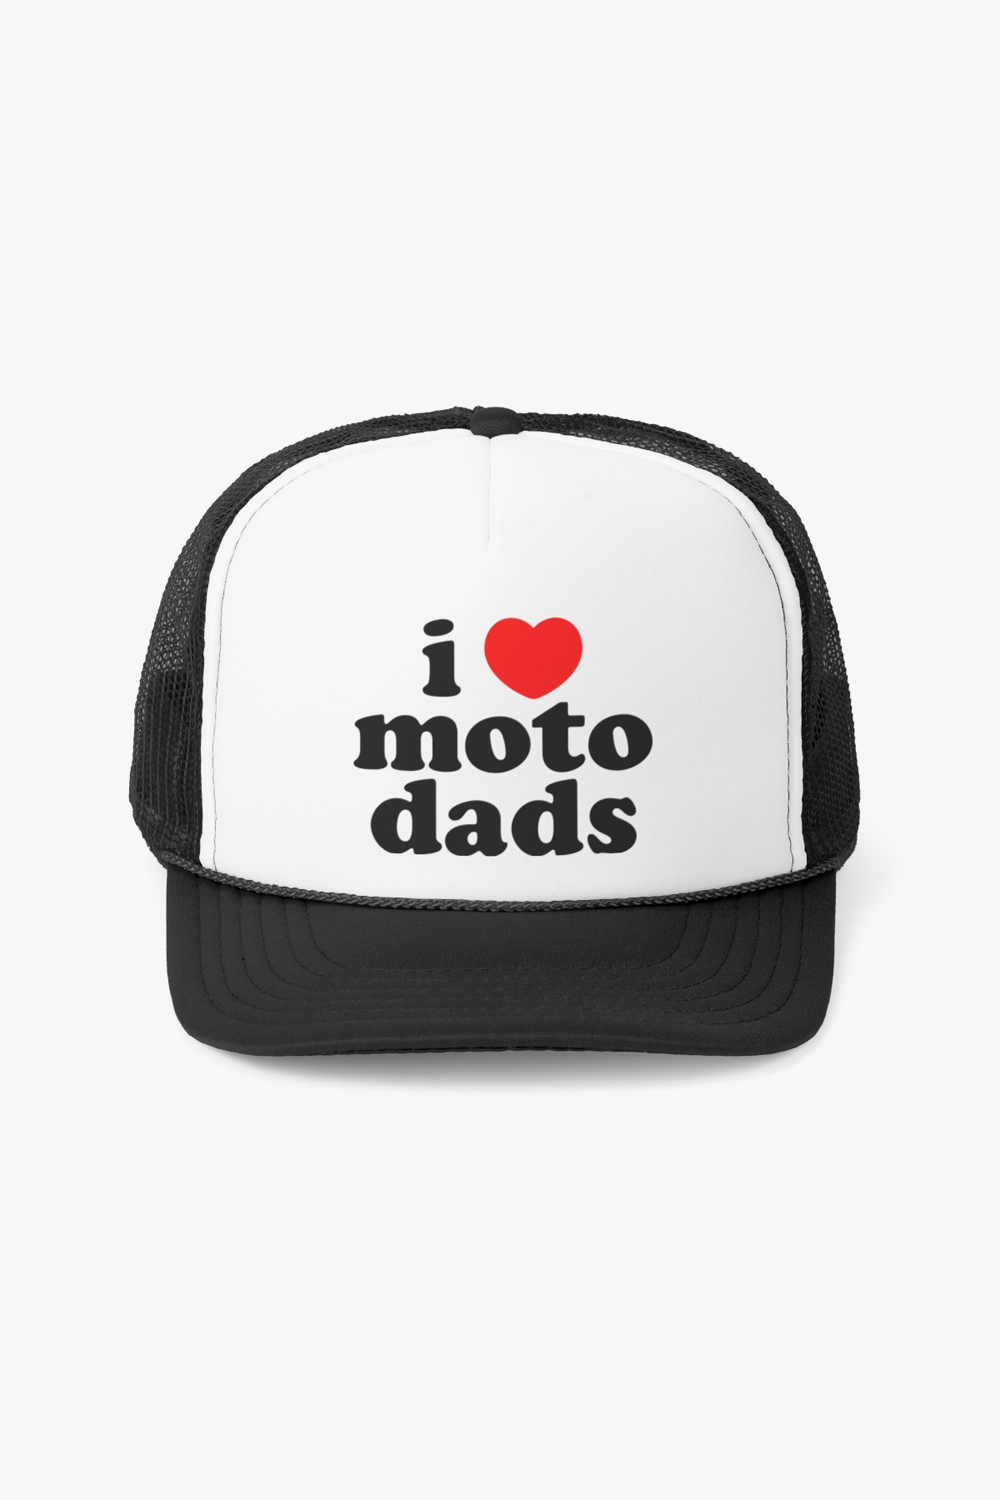 I Heart Moto Dads Trucker